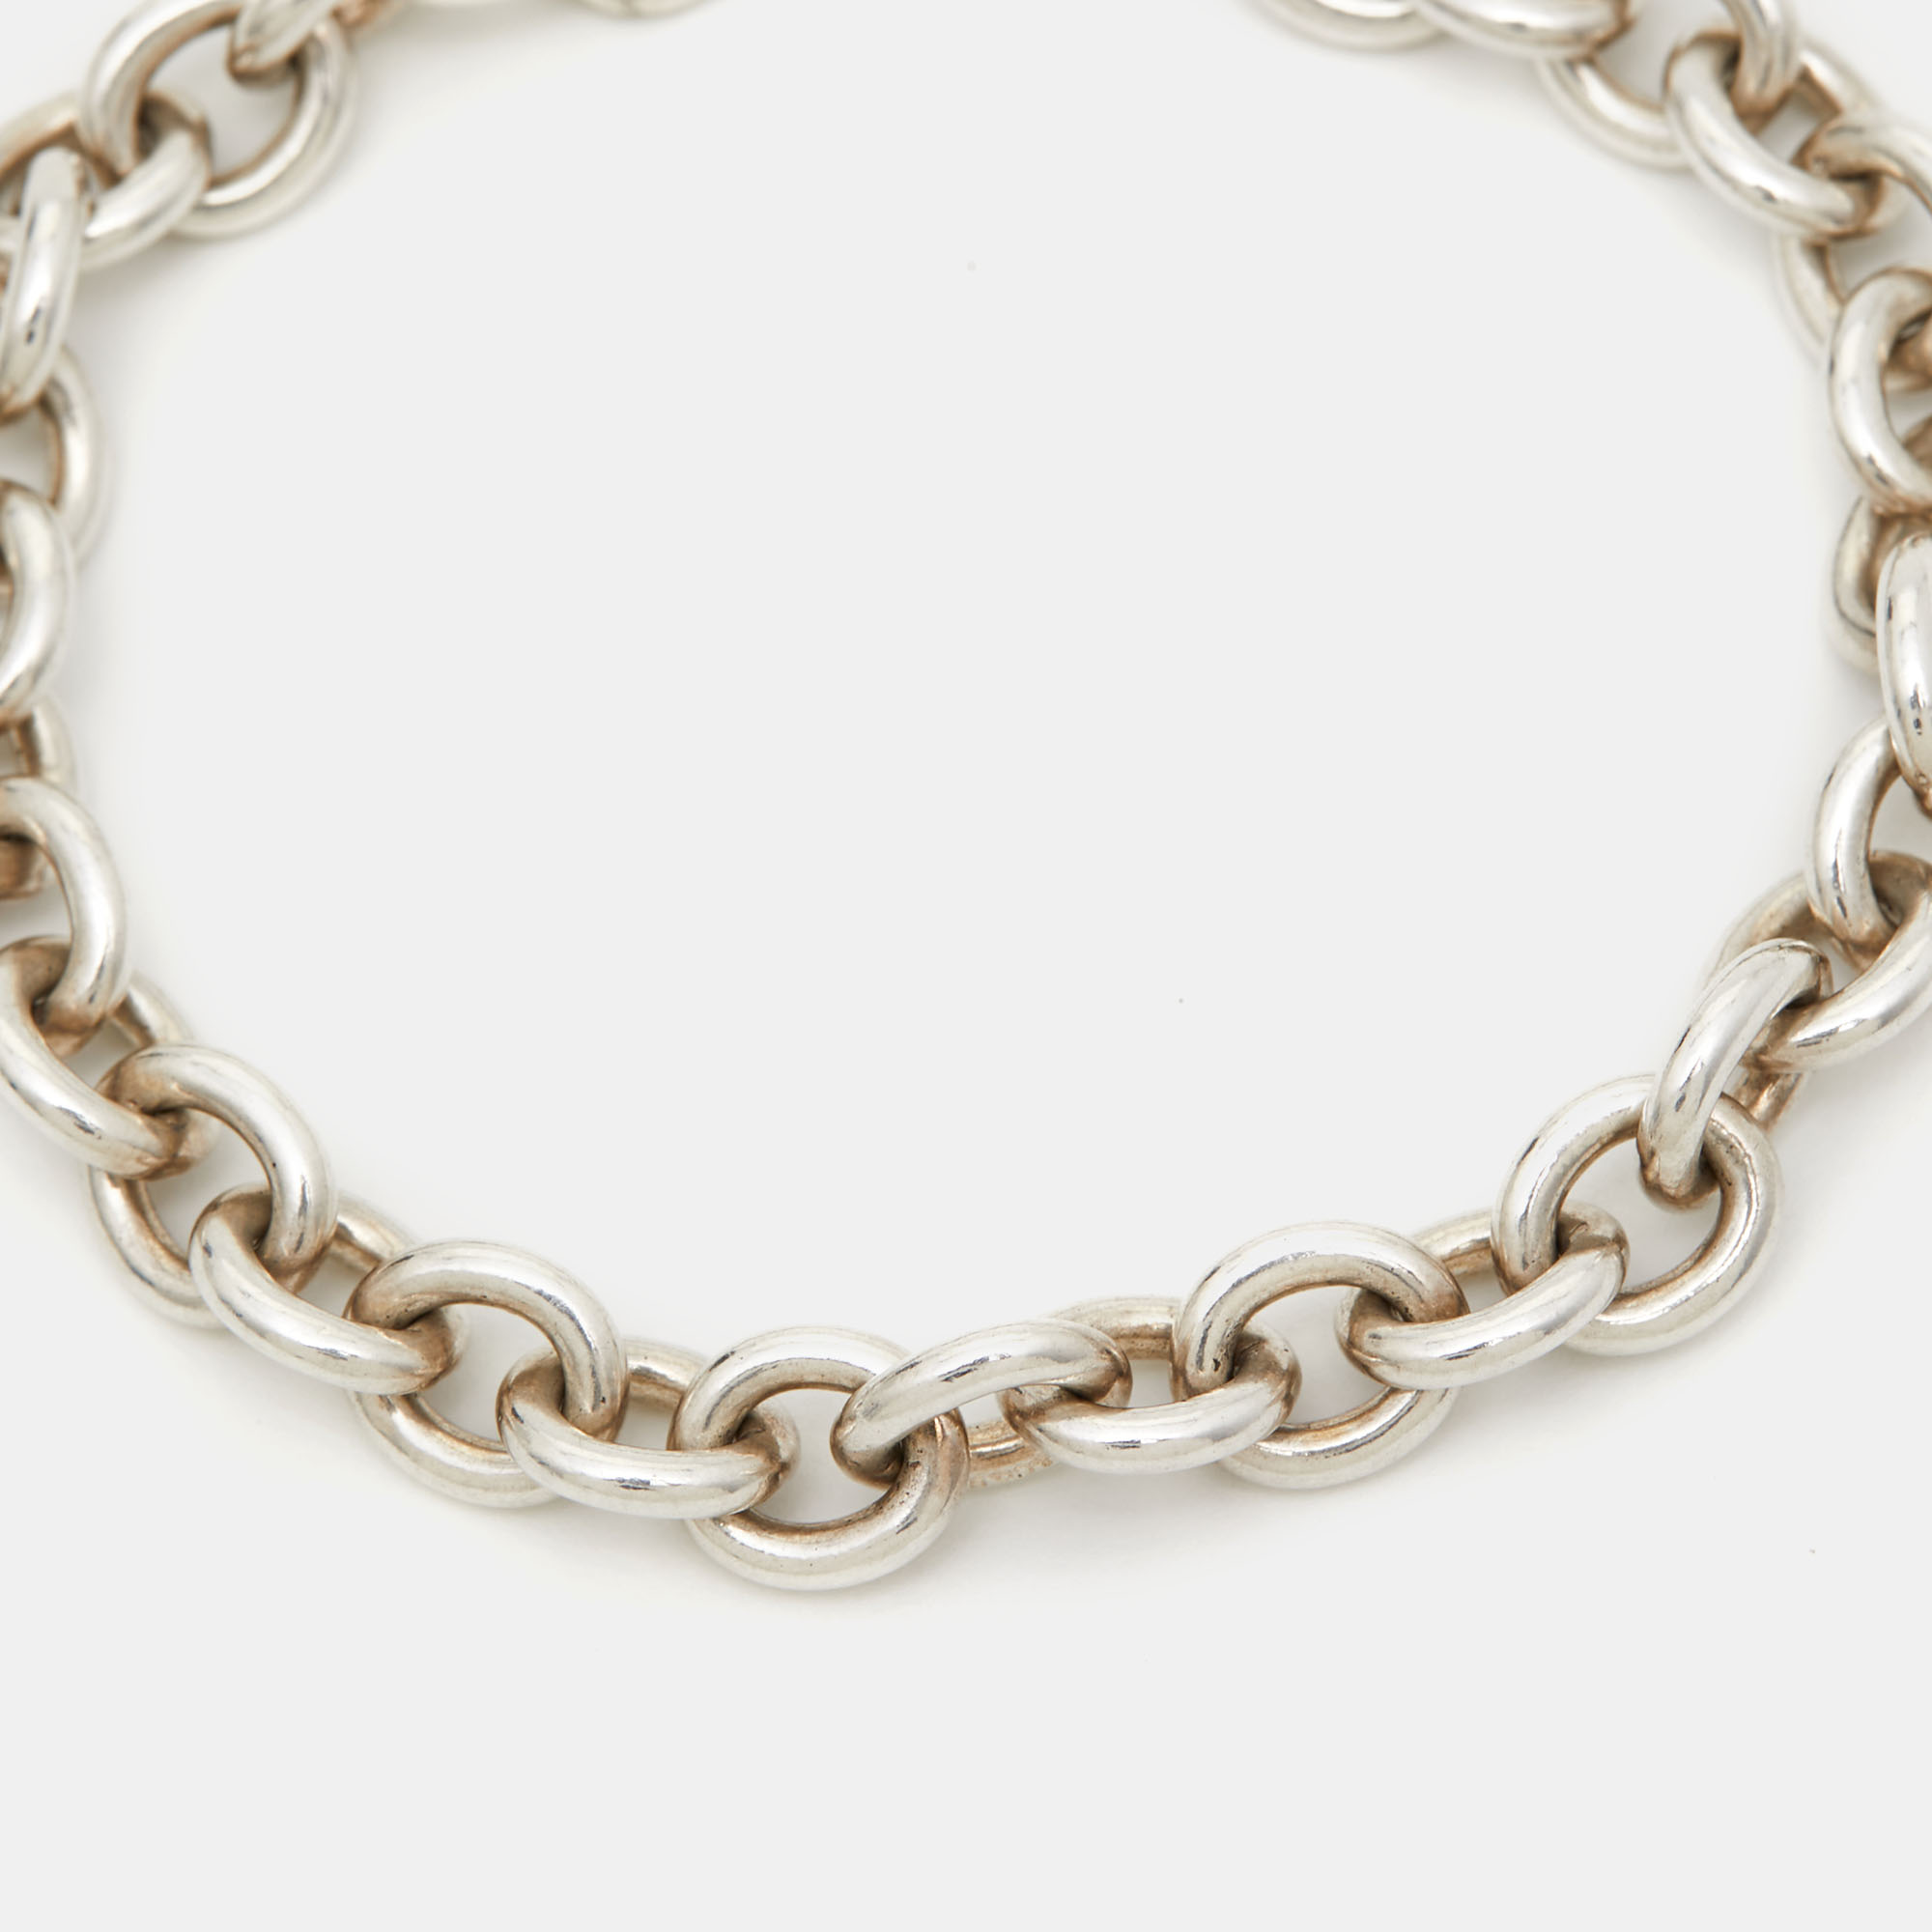 Tiffany & Co. Round Link Sterling Silver Bracelet